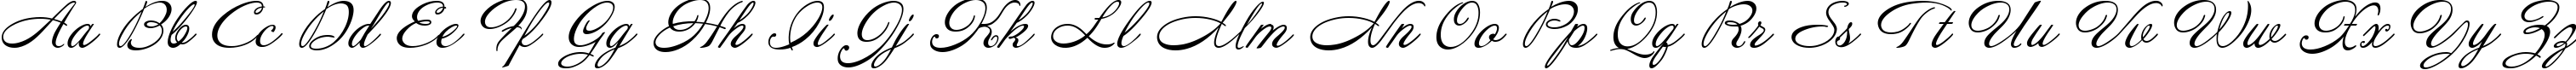 Пример написания английского алфавита шрифтом AnnabelleJF